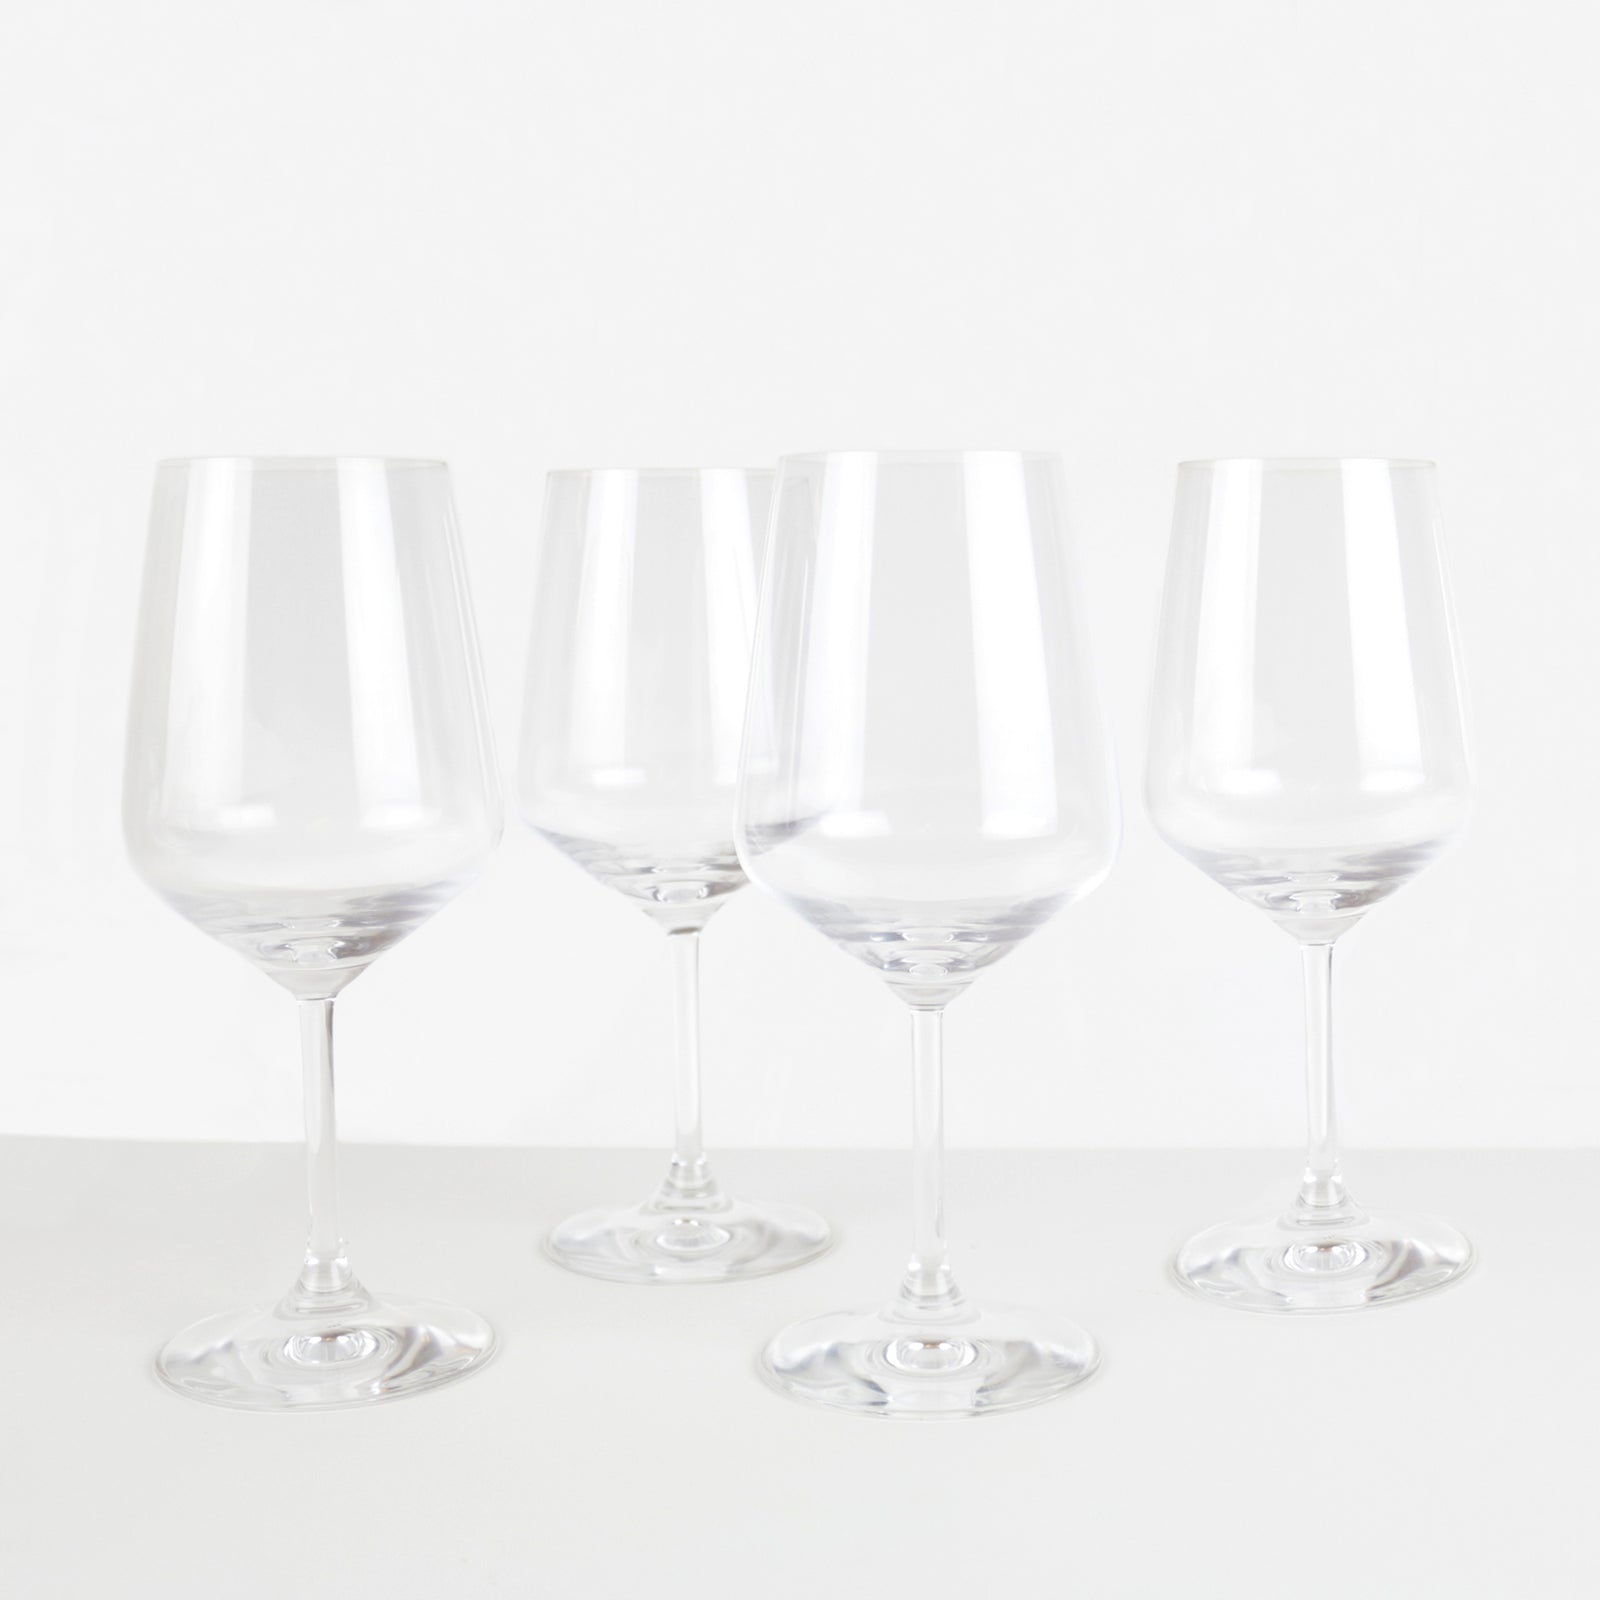 Classic Crystal Margarita Glass (Set of 2) - The VinePair Store